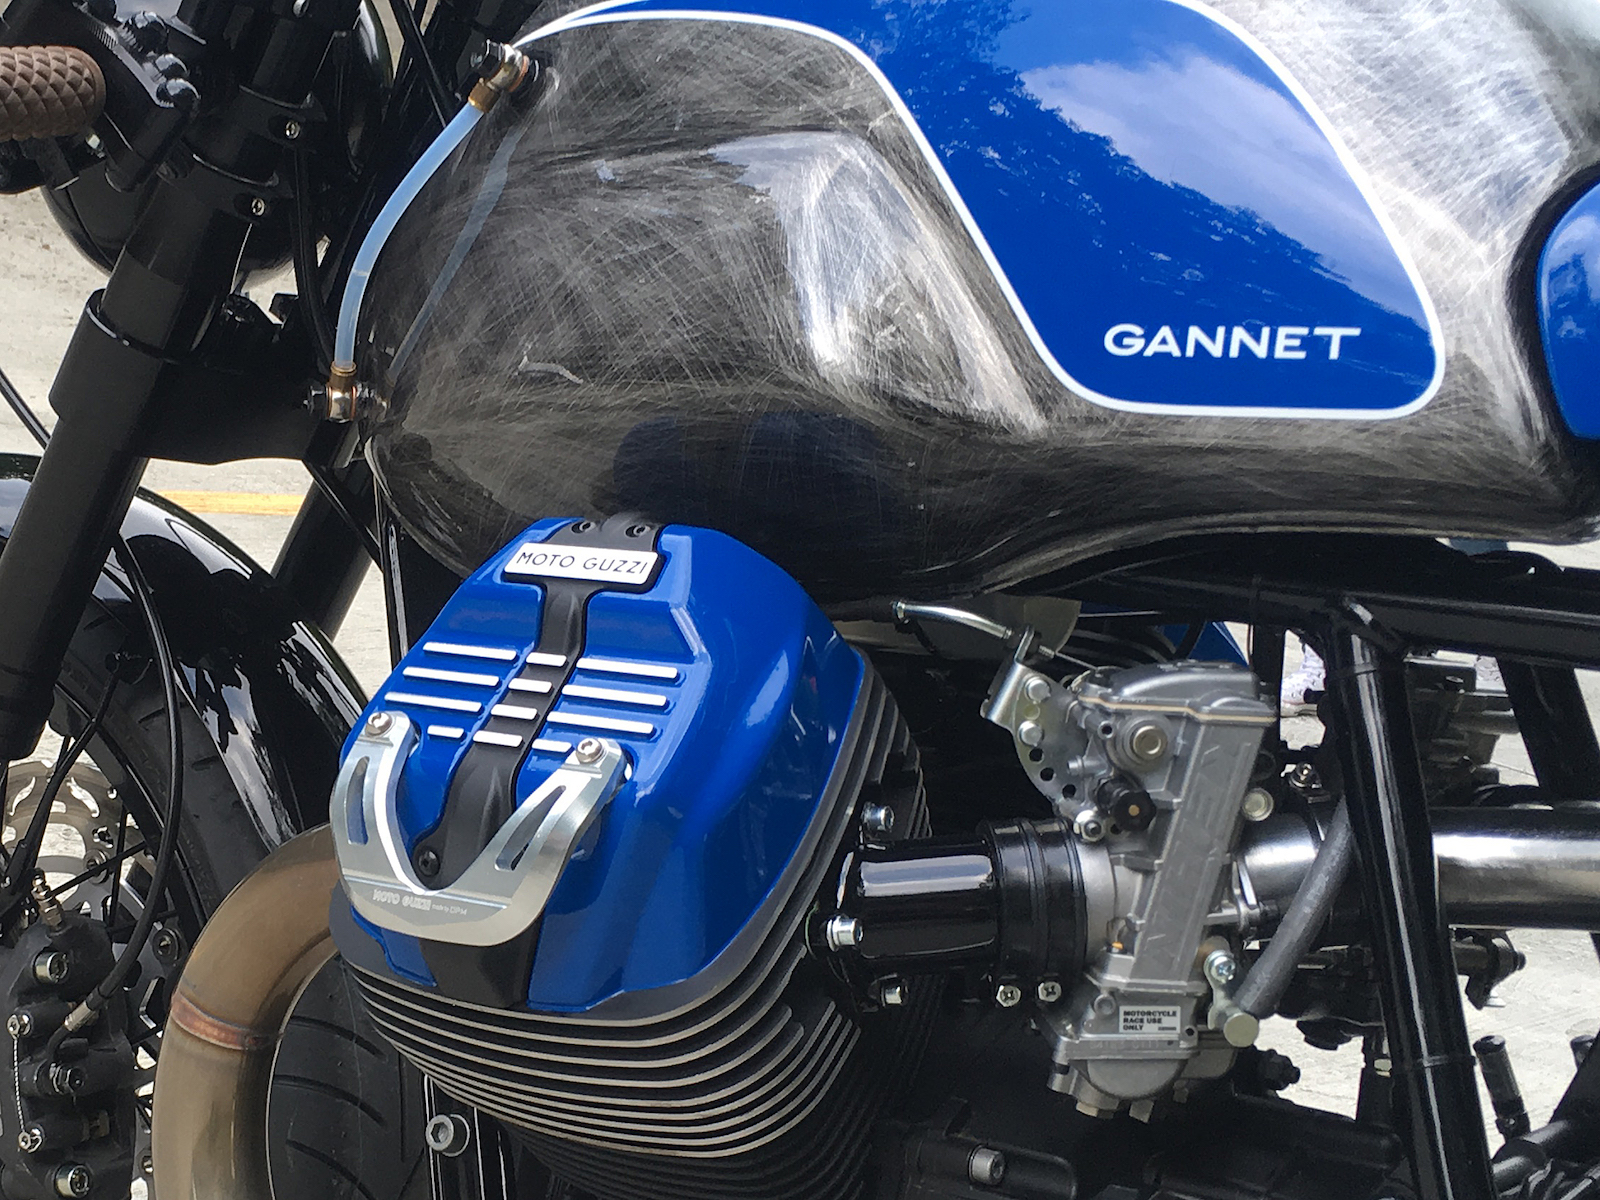 Gannet Design Moto Guzzi V9